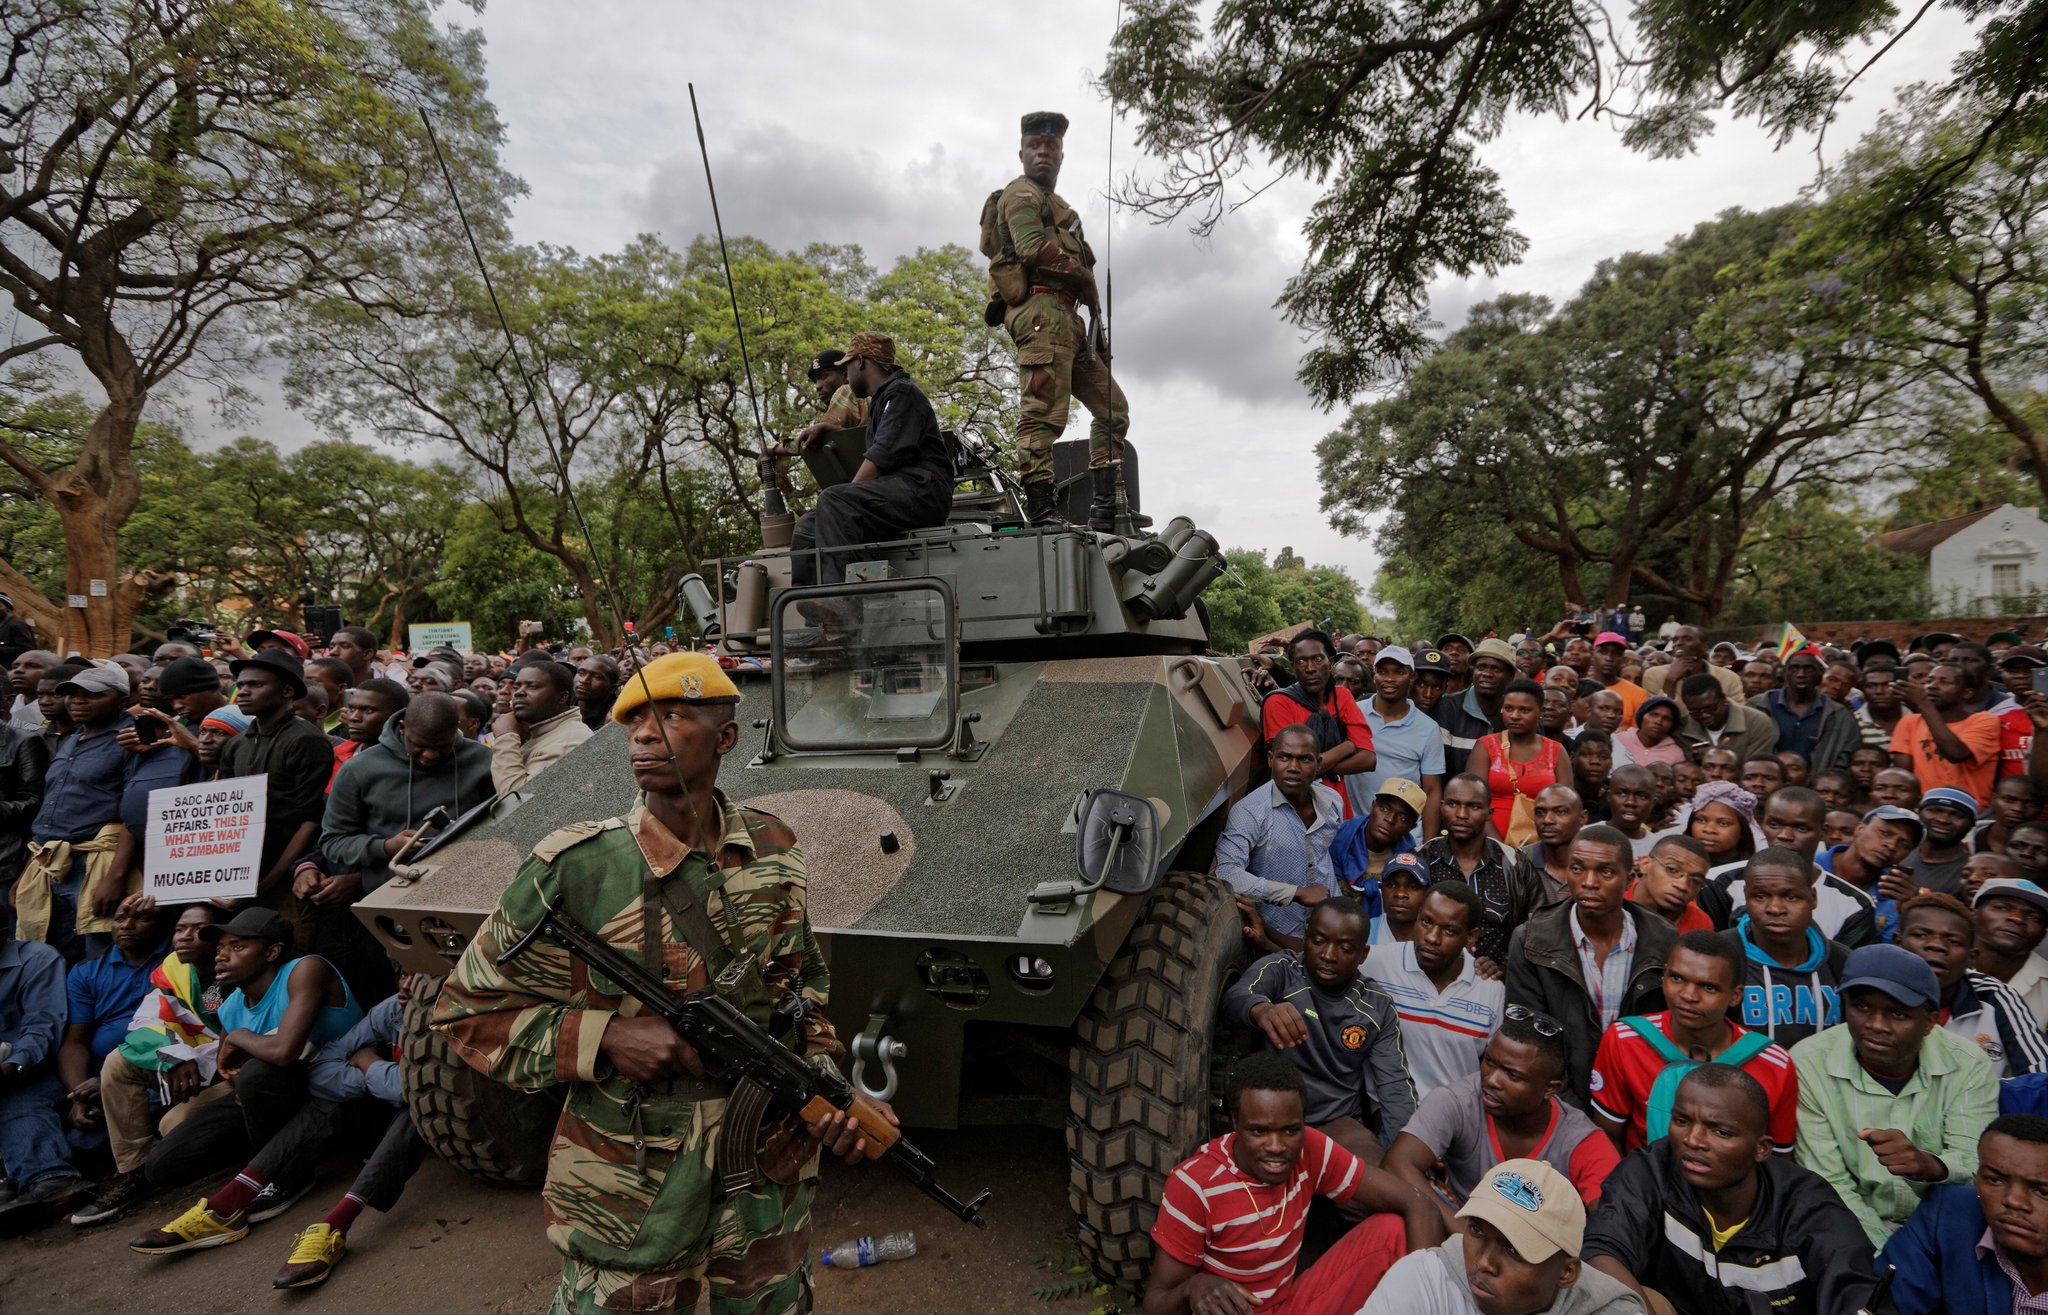 Zimbabwe Must Not Legitimize Military Coup; Sets Bad Precedent